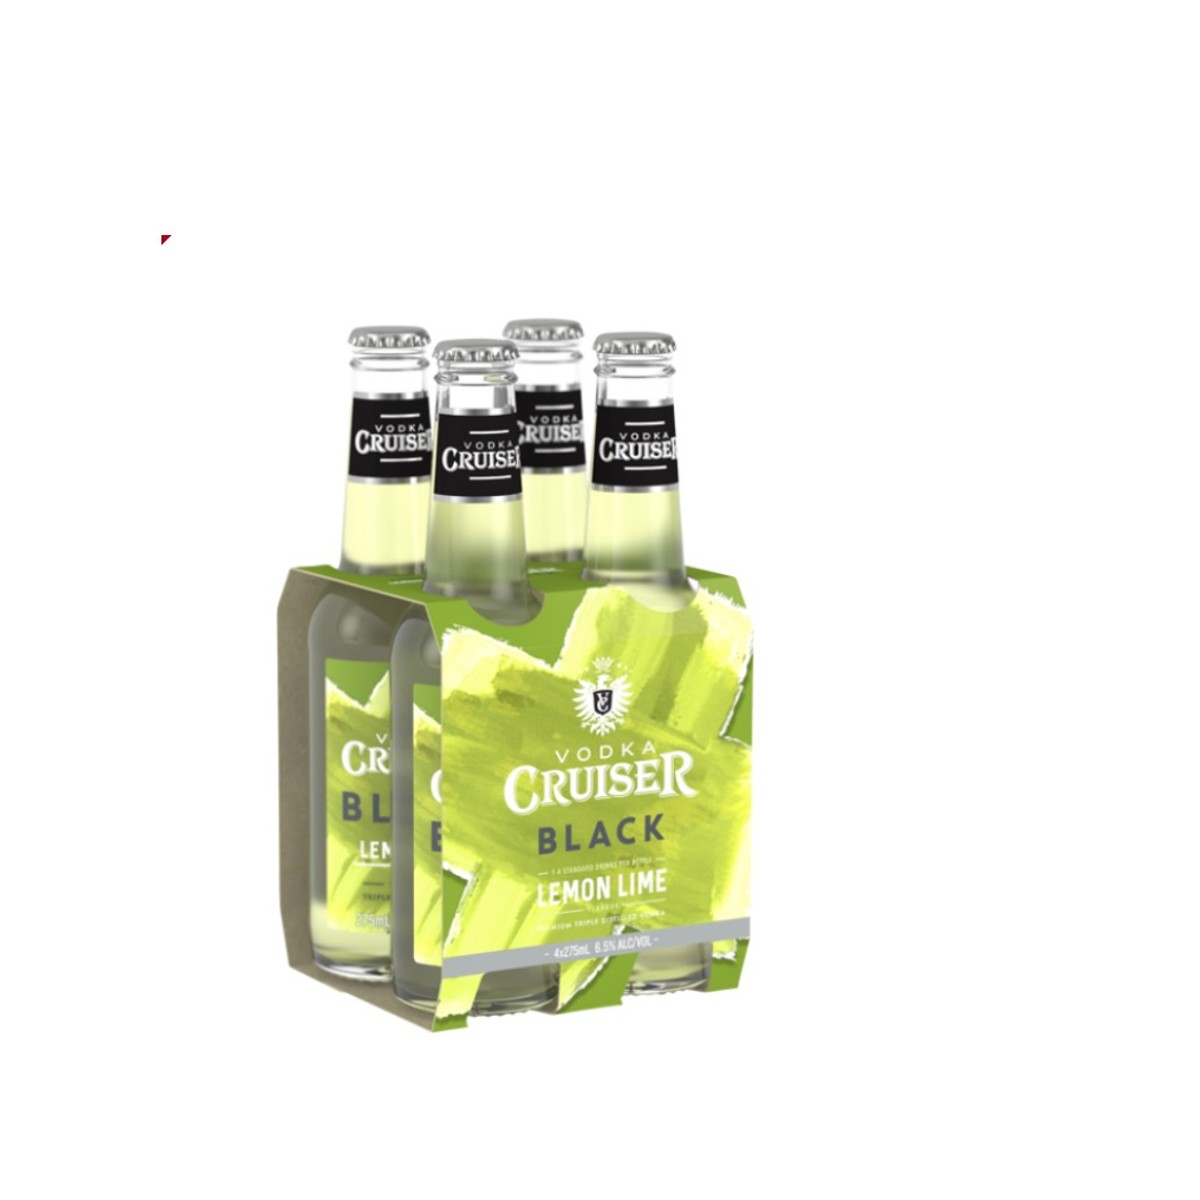 Bud Light Lime 473ml – BSW Liquor